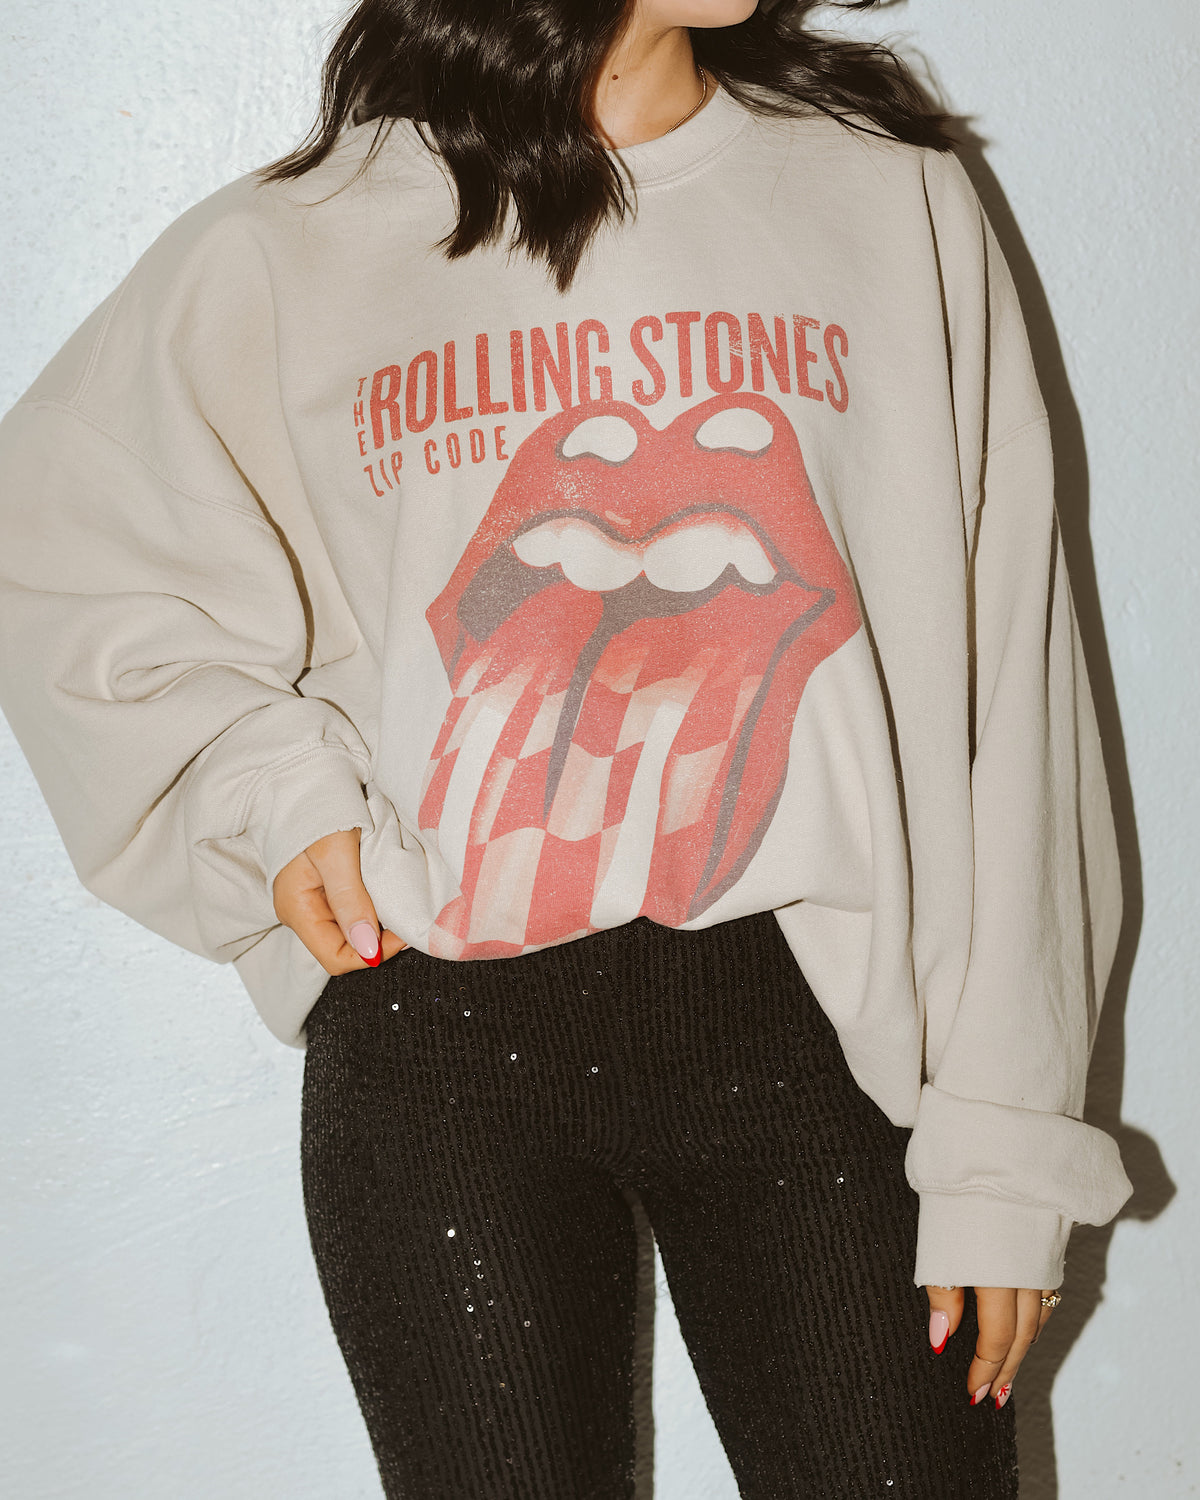 Rolling Stones Zip Code Sand Thrifted Sweatshirt - shoplivylu